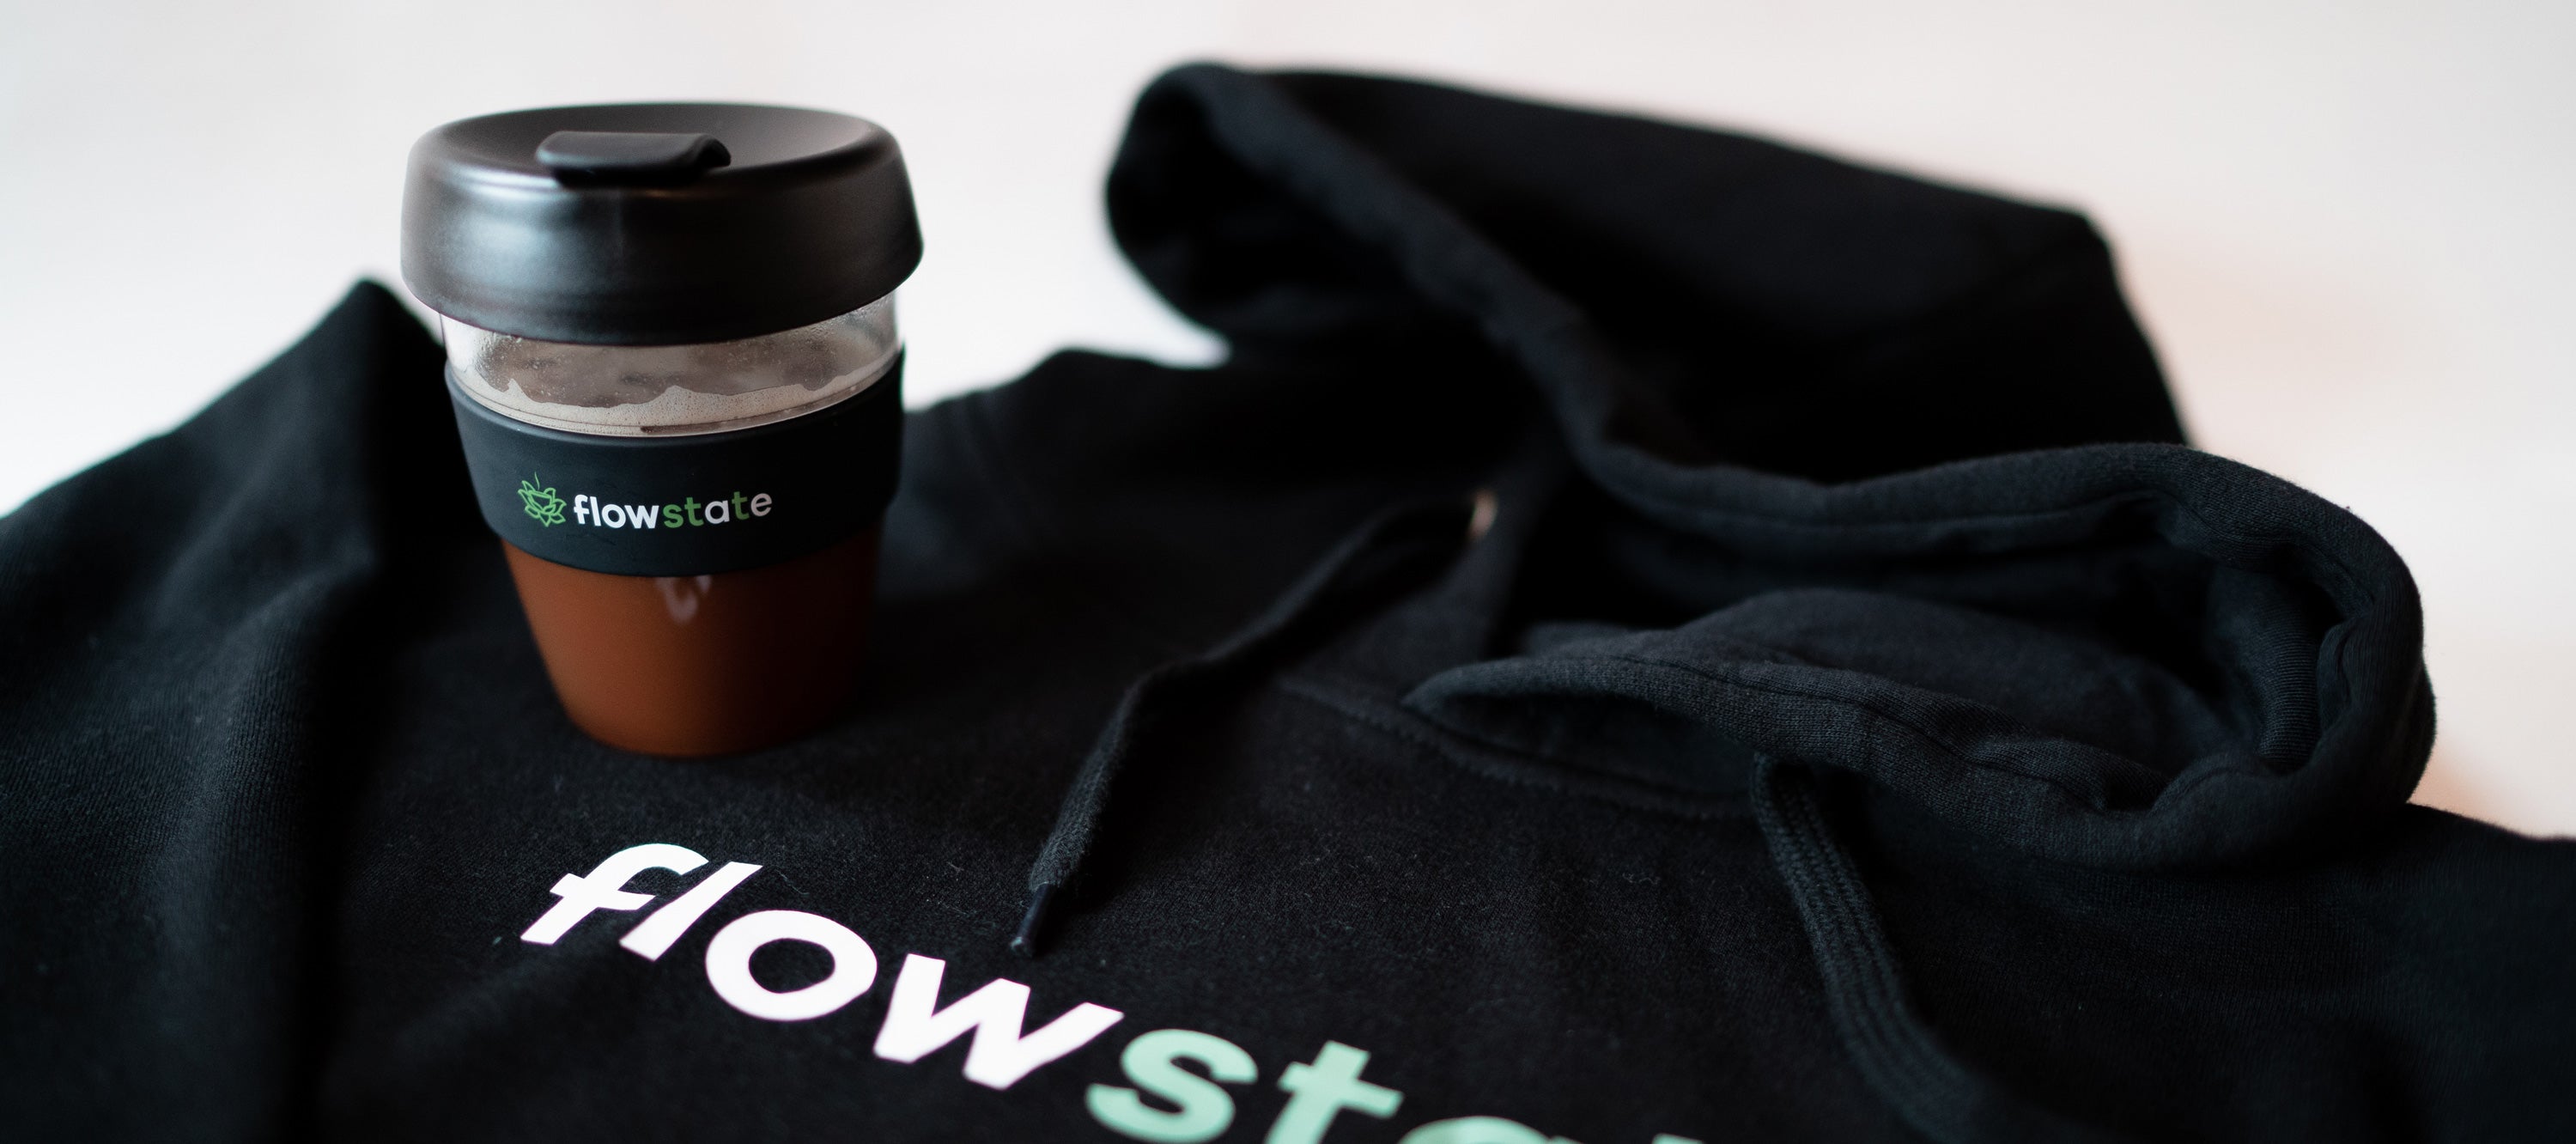 Flowstate Coffee Co Merchandise